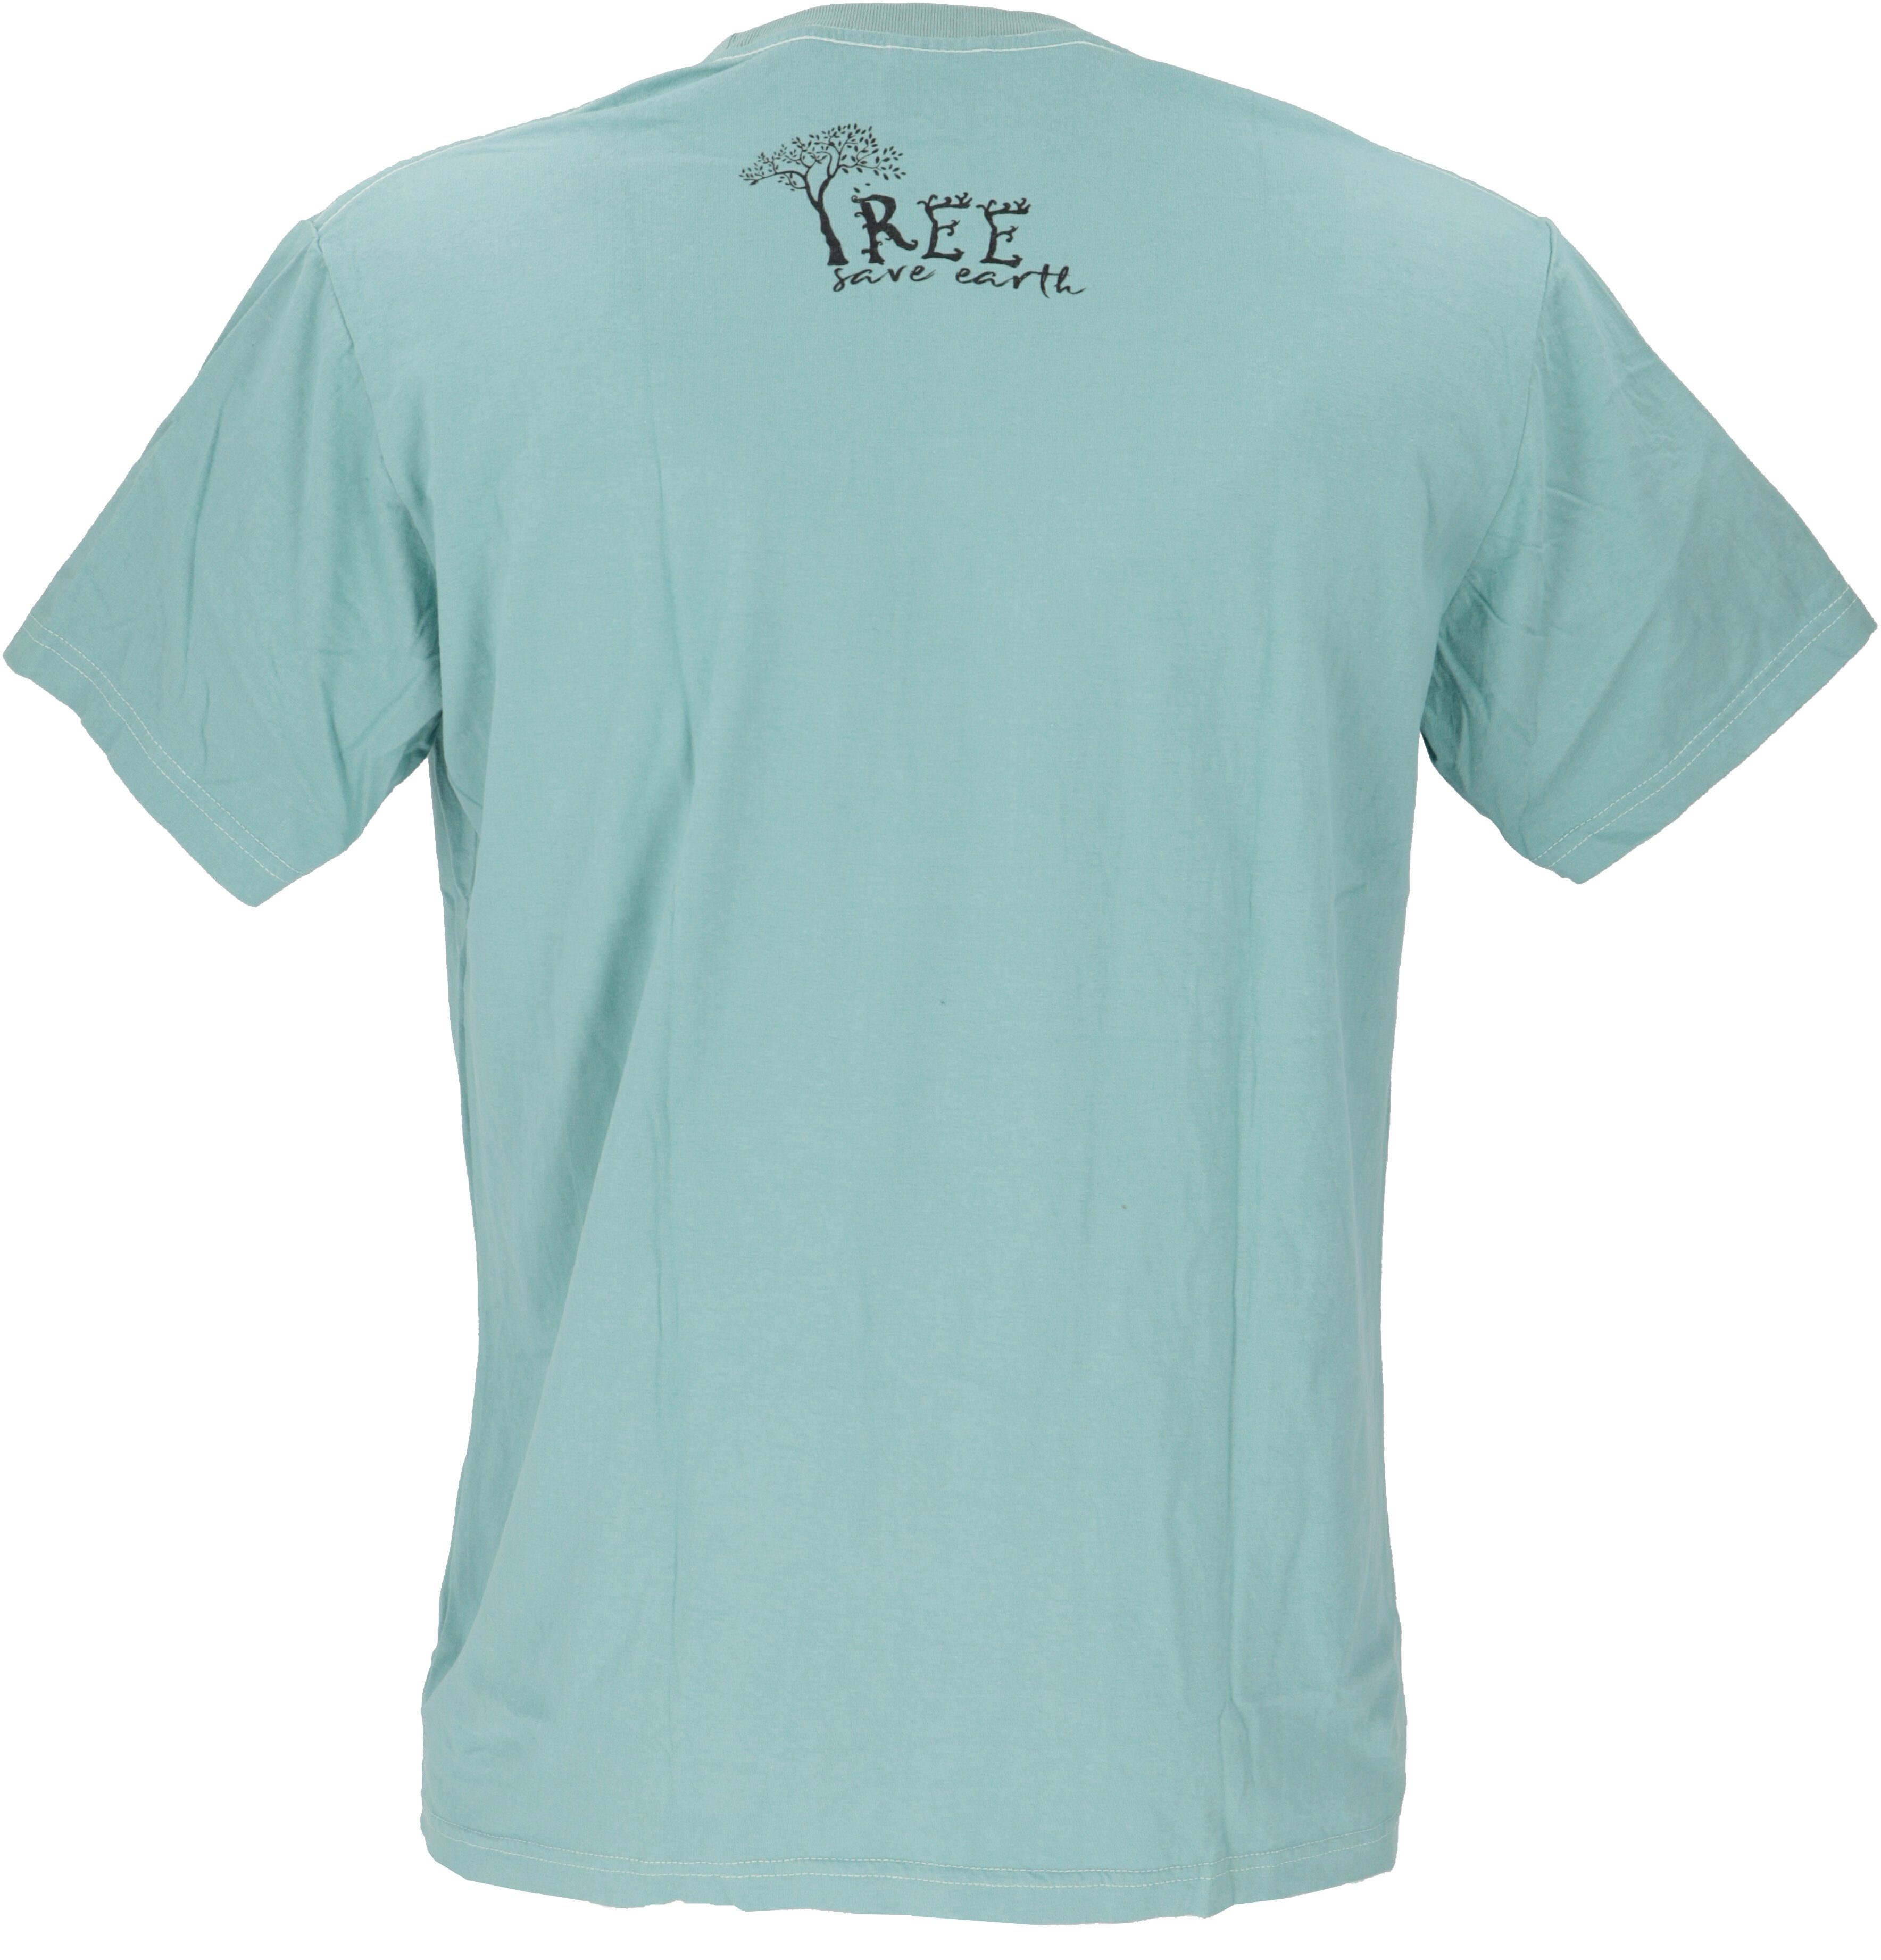 Guru-Shop T-Shirt Retro T-Shirt, Retro T-Shirt earth Ice/aqua save - Tree